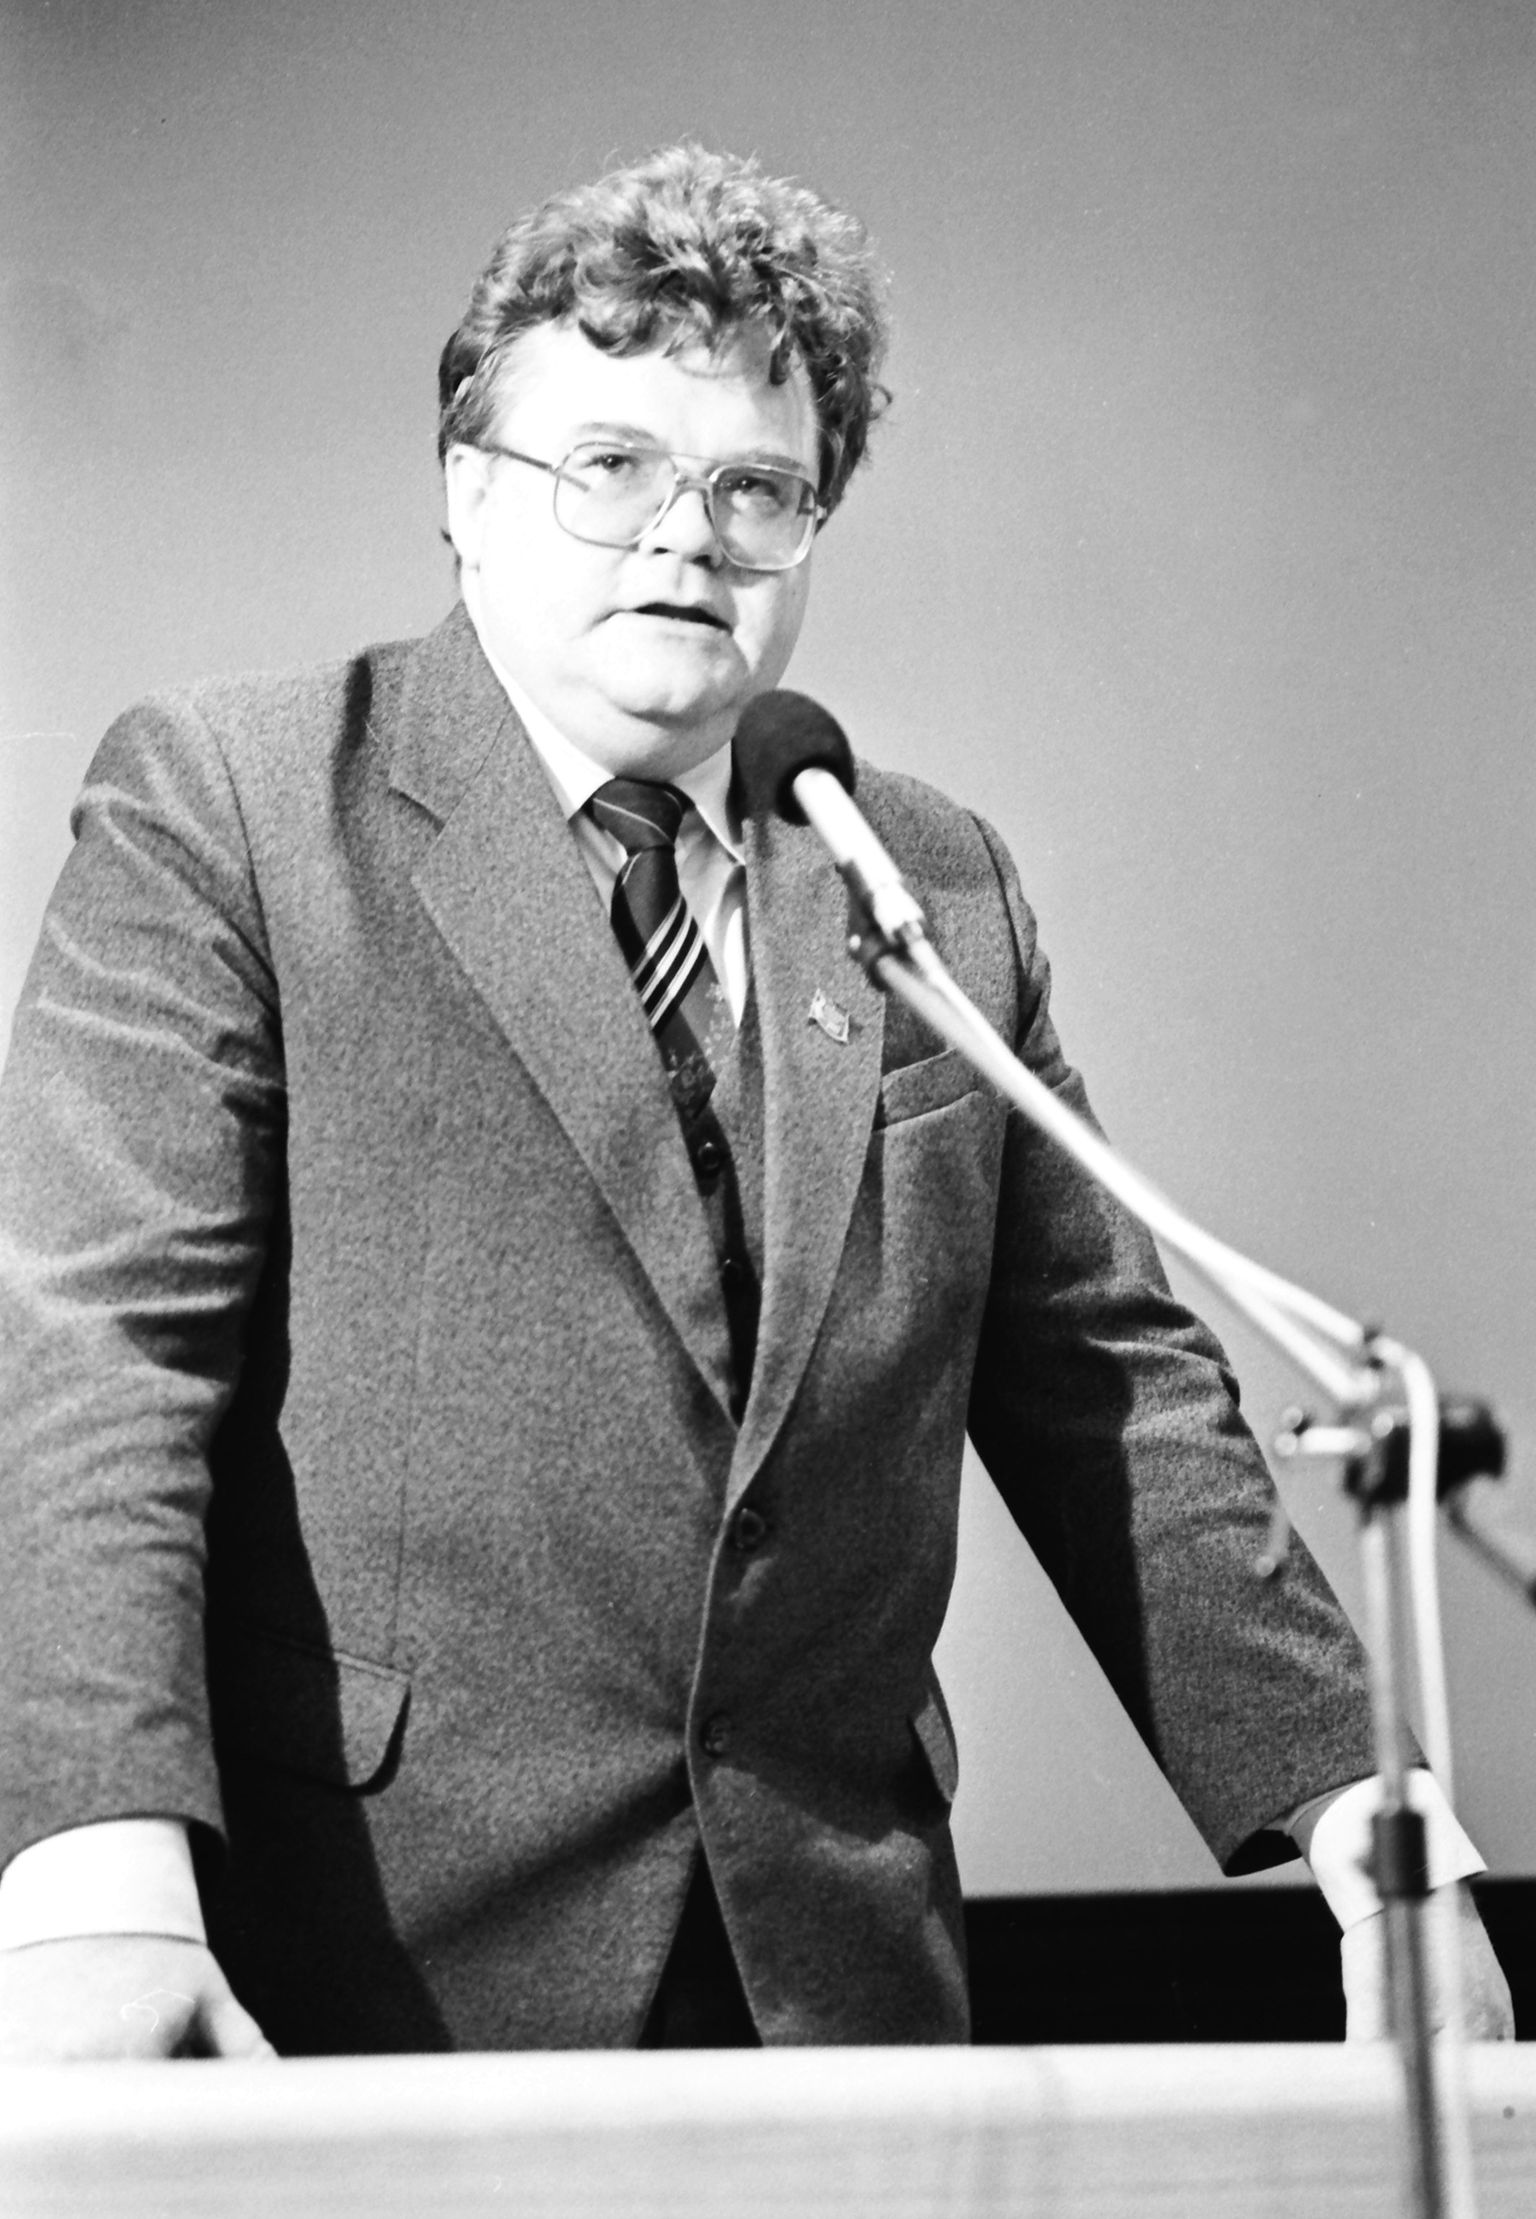 Эдгар Сависаар на собрании "Народного фронта" в Таллиннском техническом университете.